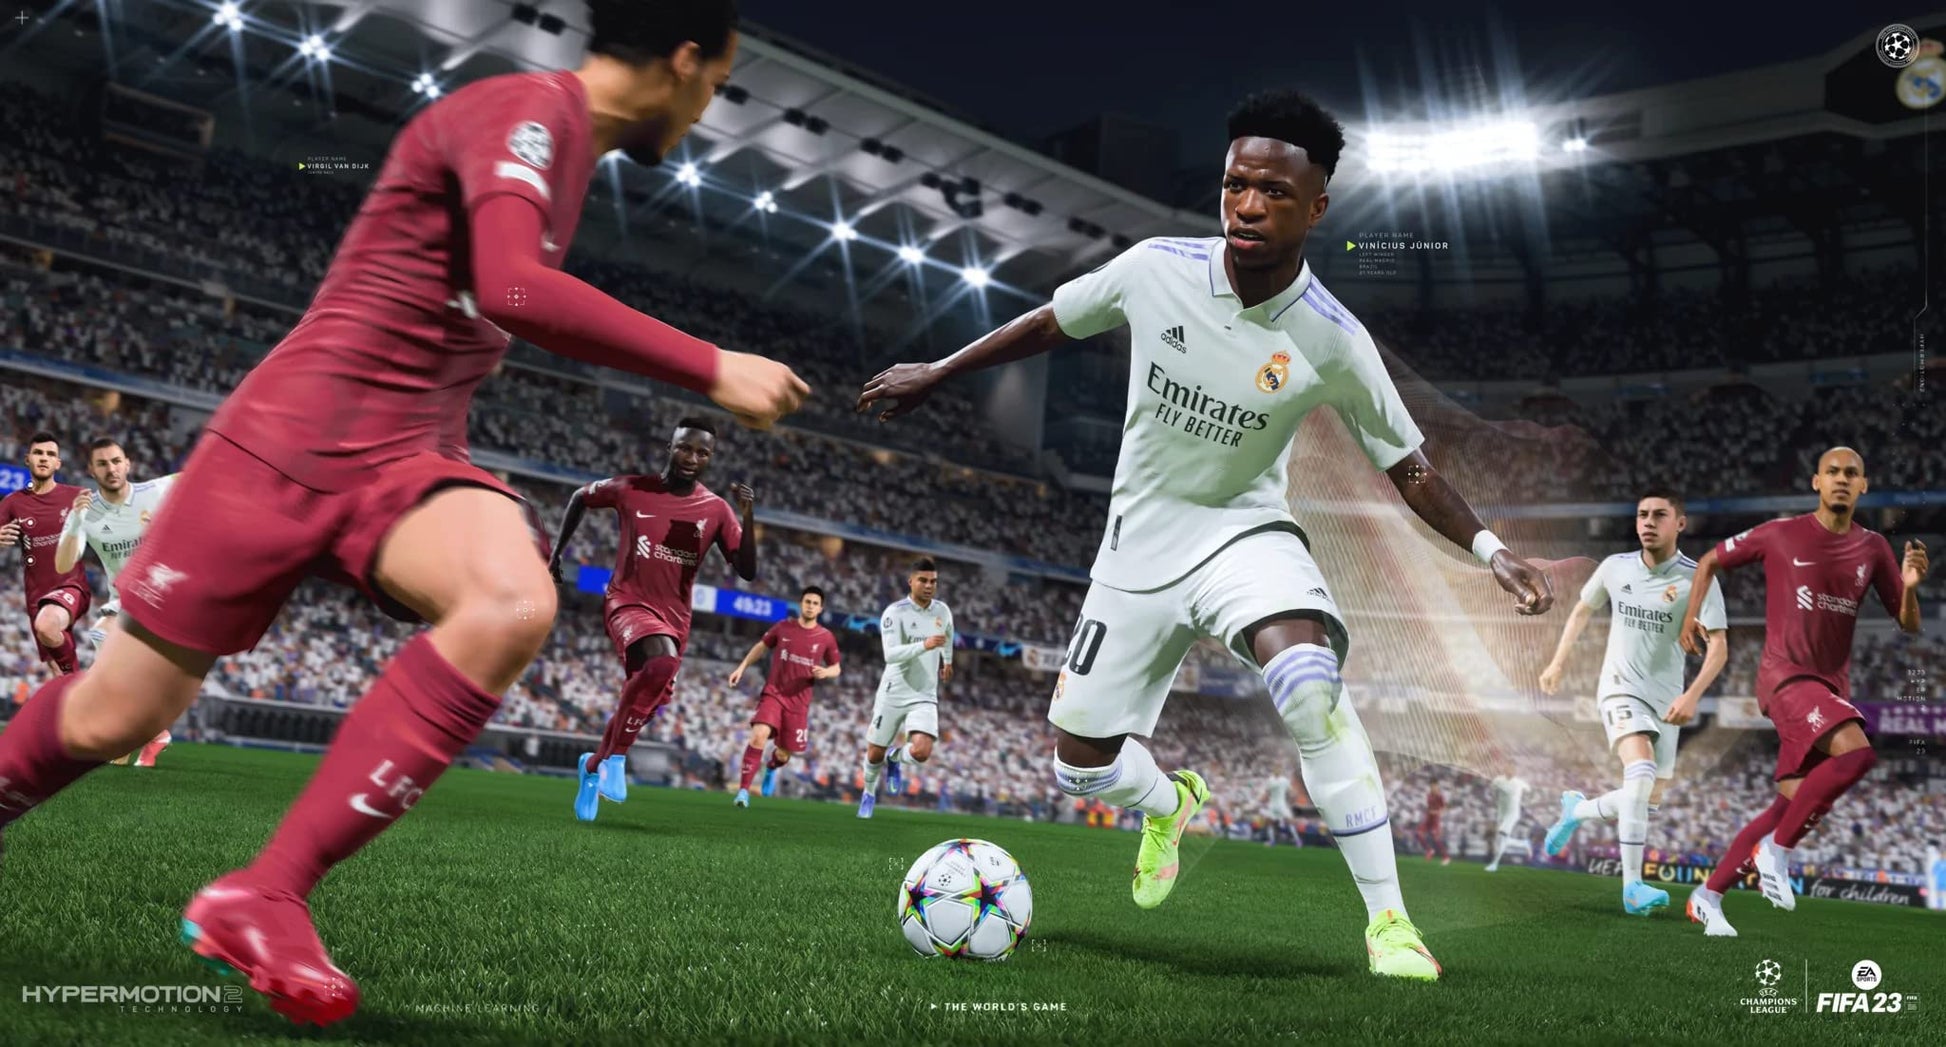 FIFA 23 Legacy Edition (Switch) Import Region Free - amzGamess